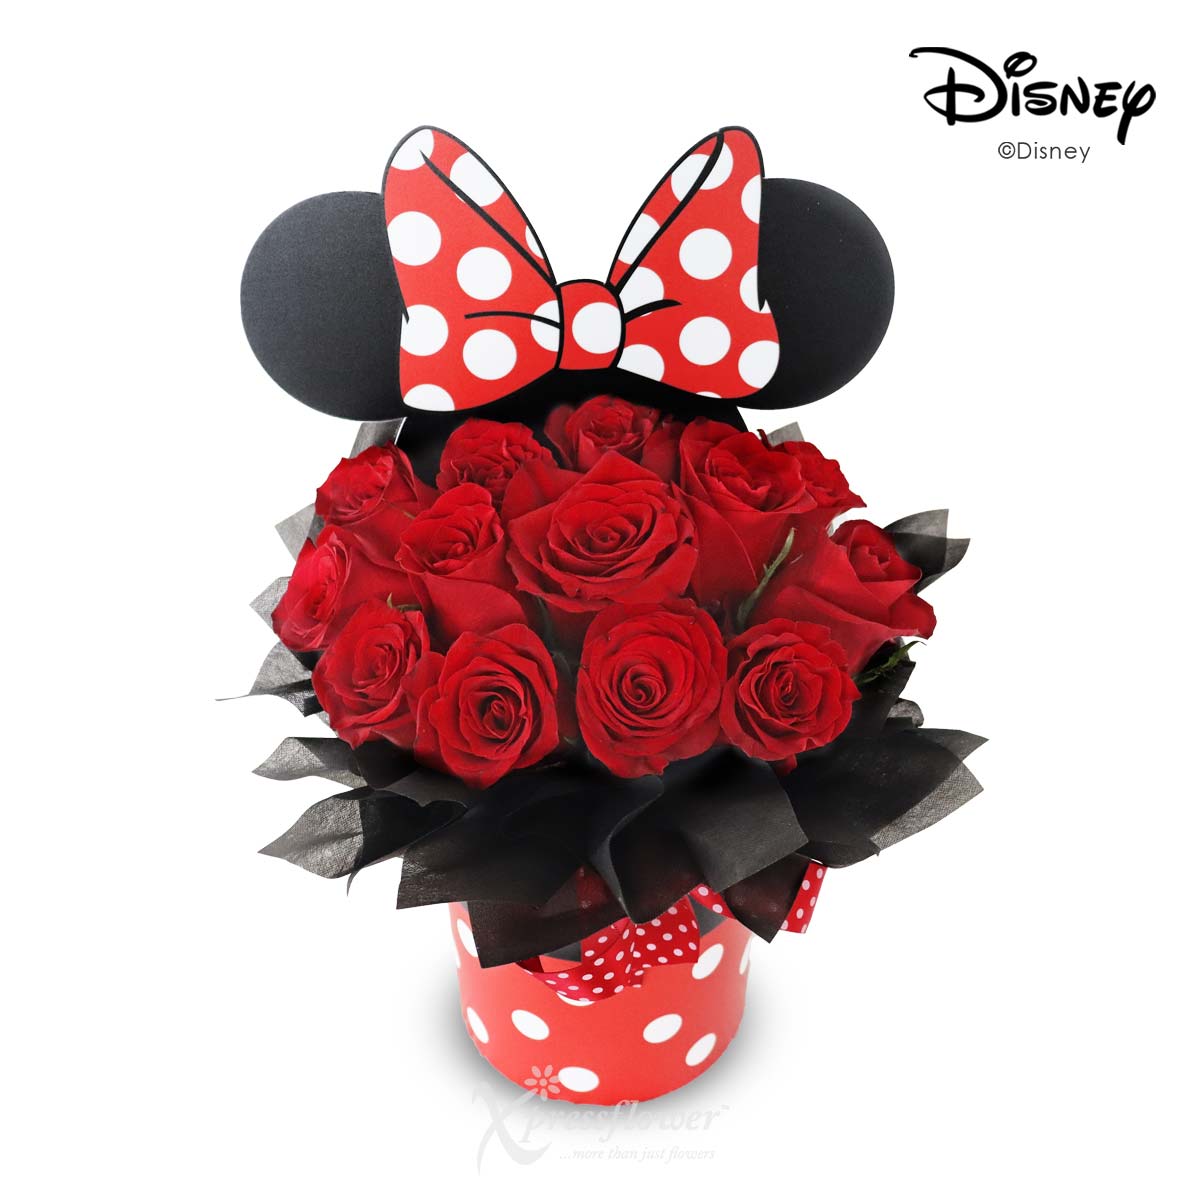 DSAR2305_Minnies Passion 18 Red Roses Disney Bloom Box 210923 1b